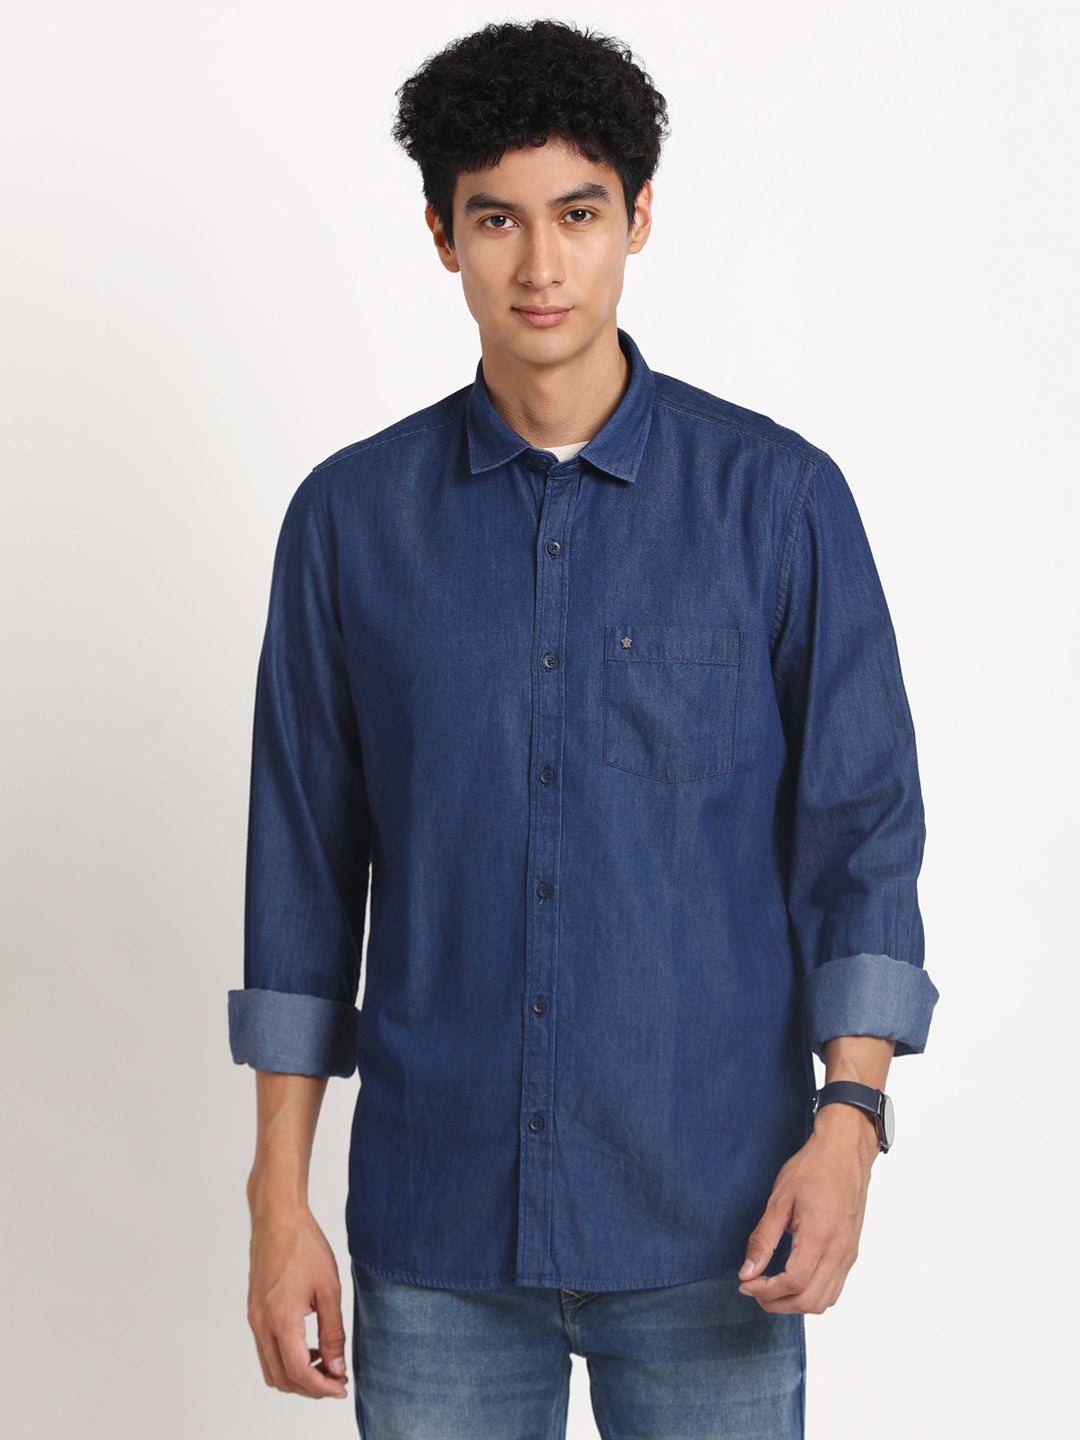 100% Cotton Indigo Navy Blue Plain Slim Fit Full Sleeve Casual Shirt